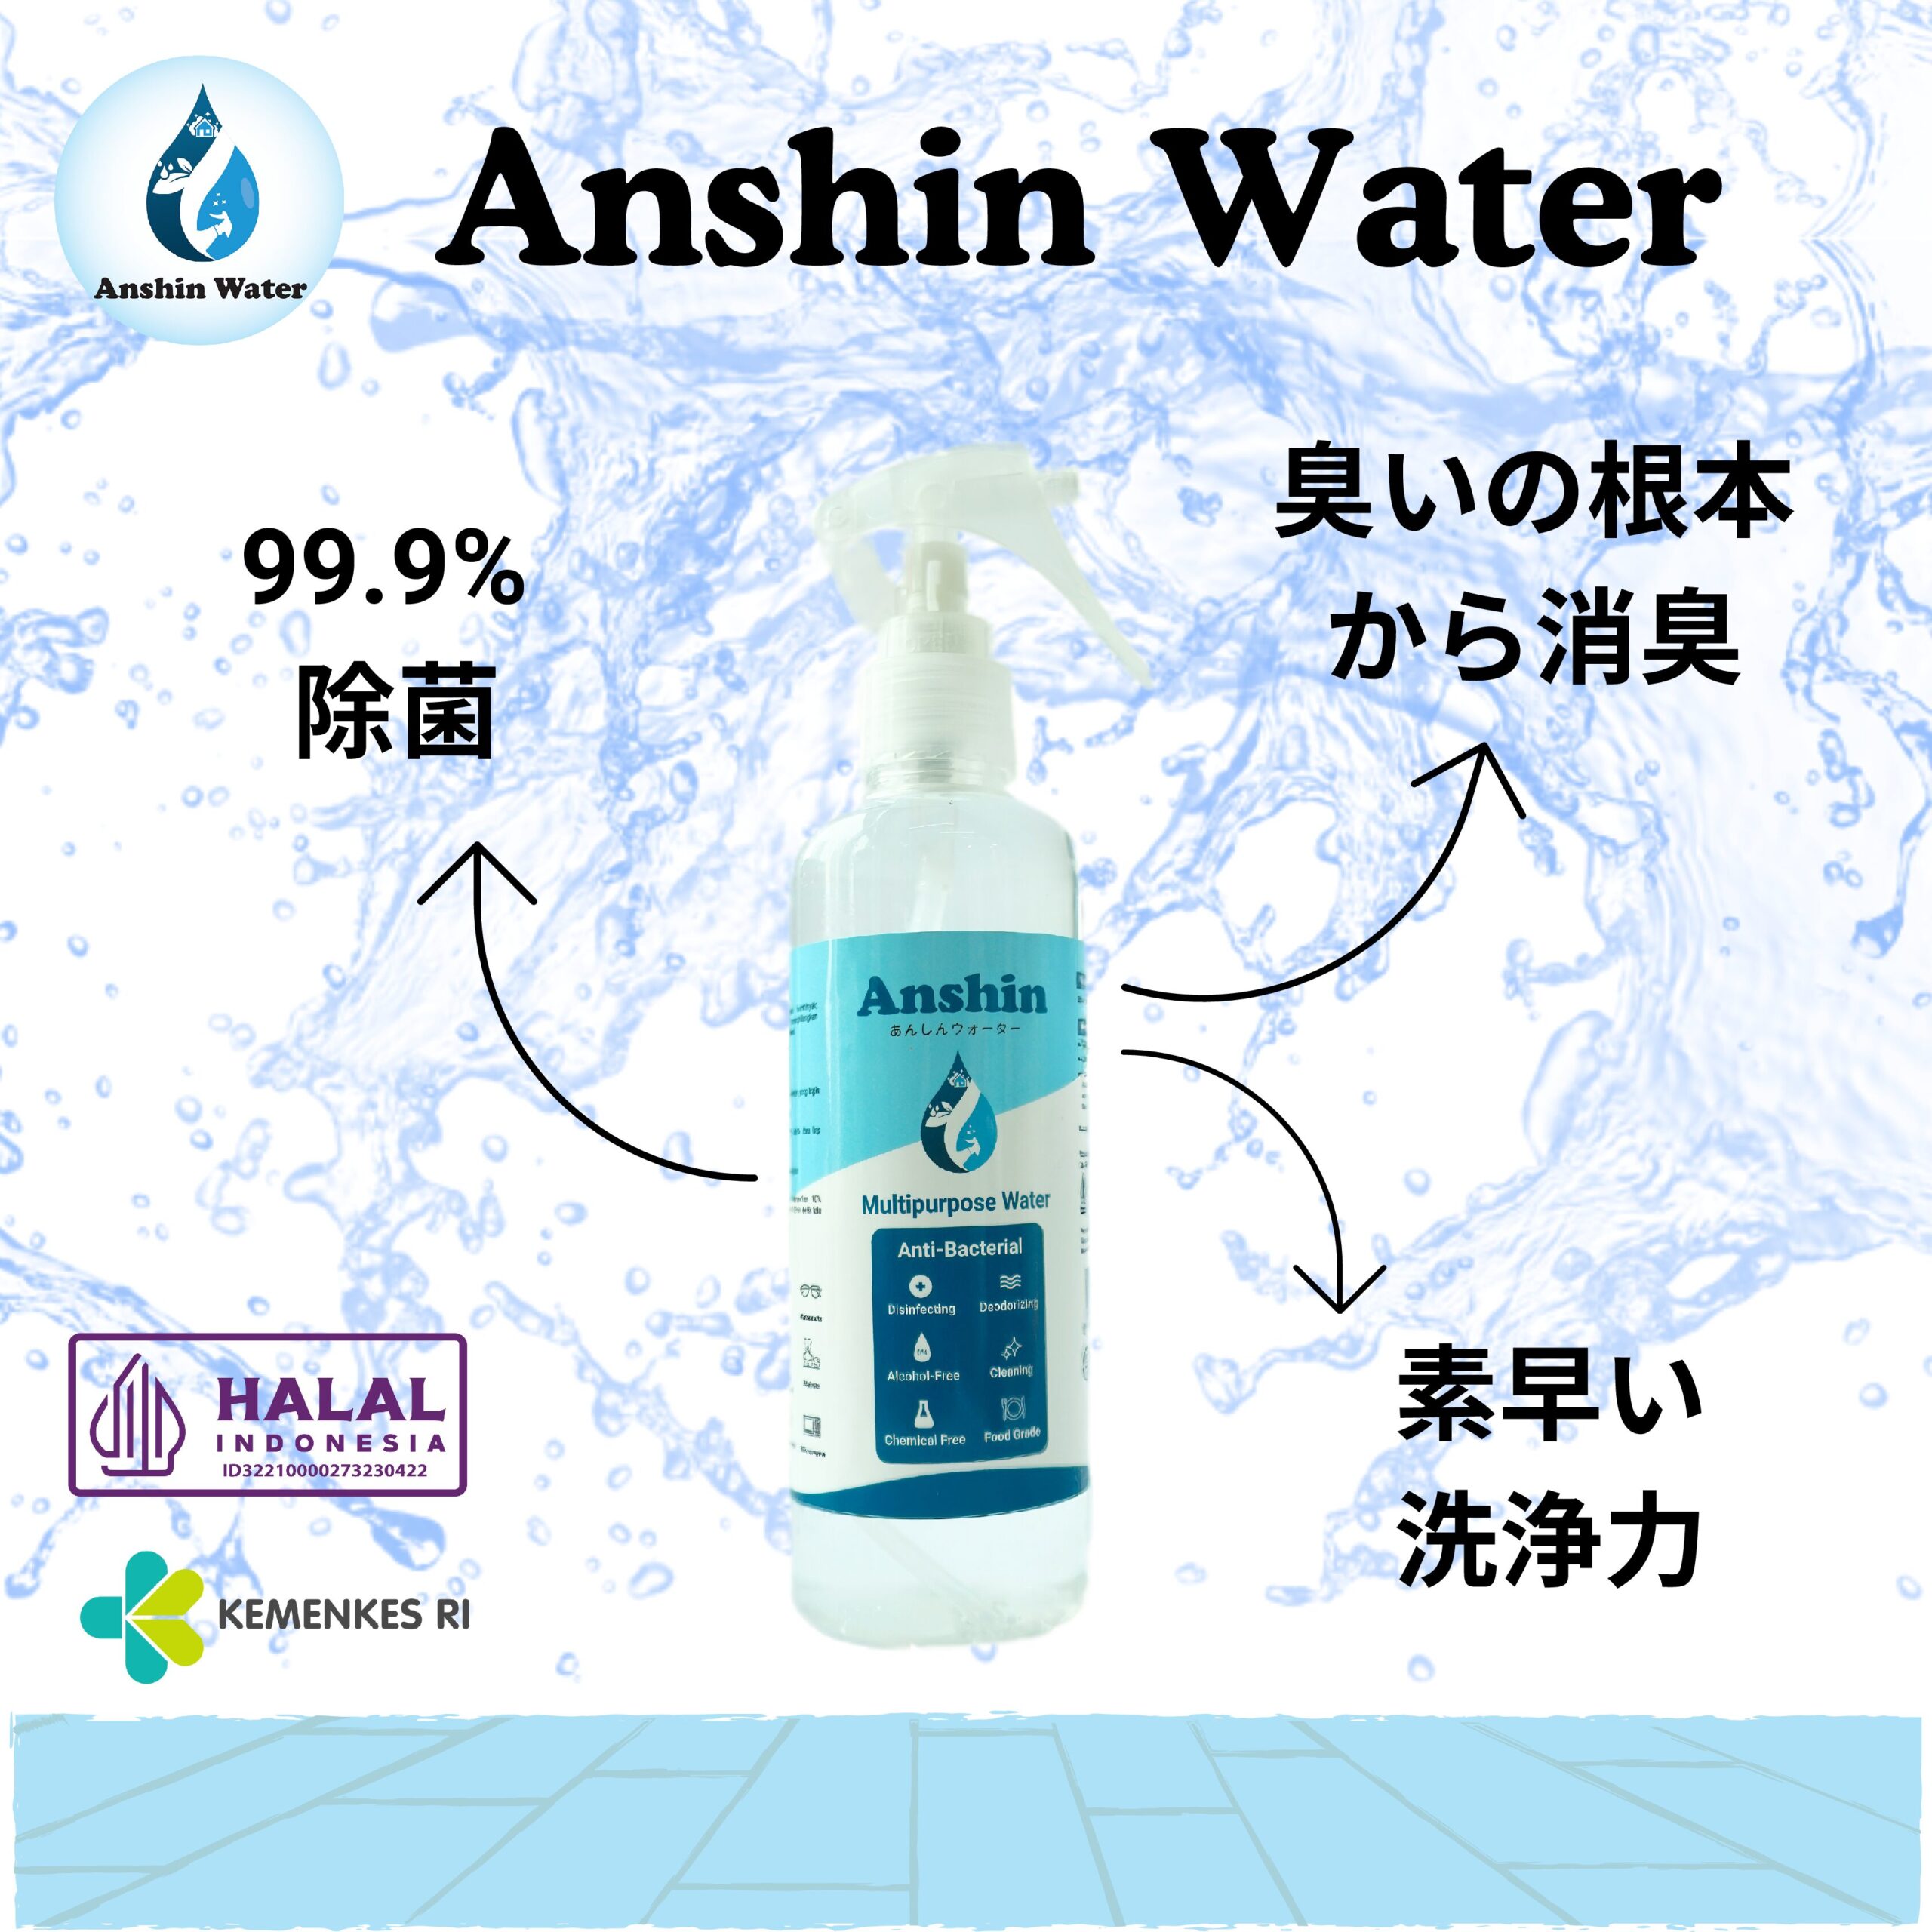 Anshin Waterとは、インドネシアの消臭スプレー、除菌スプレー